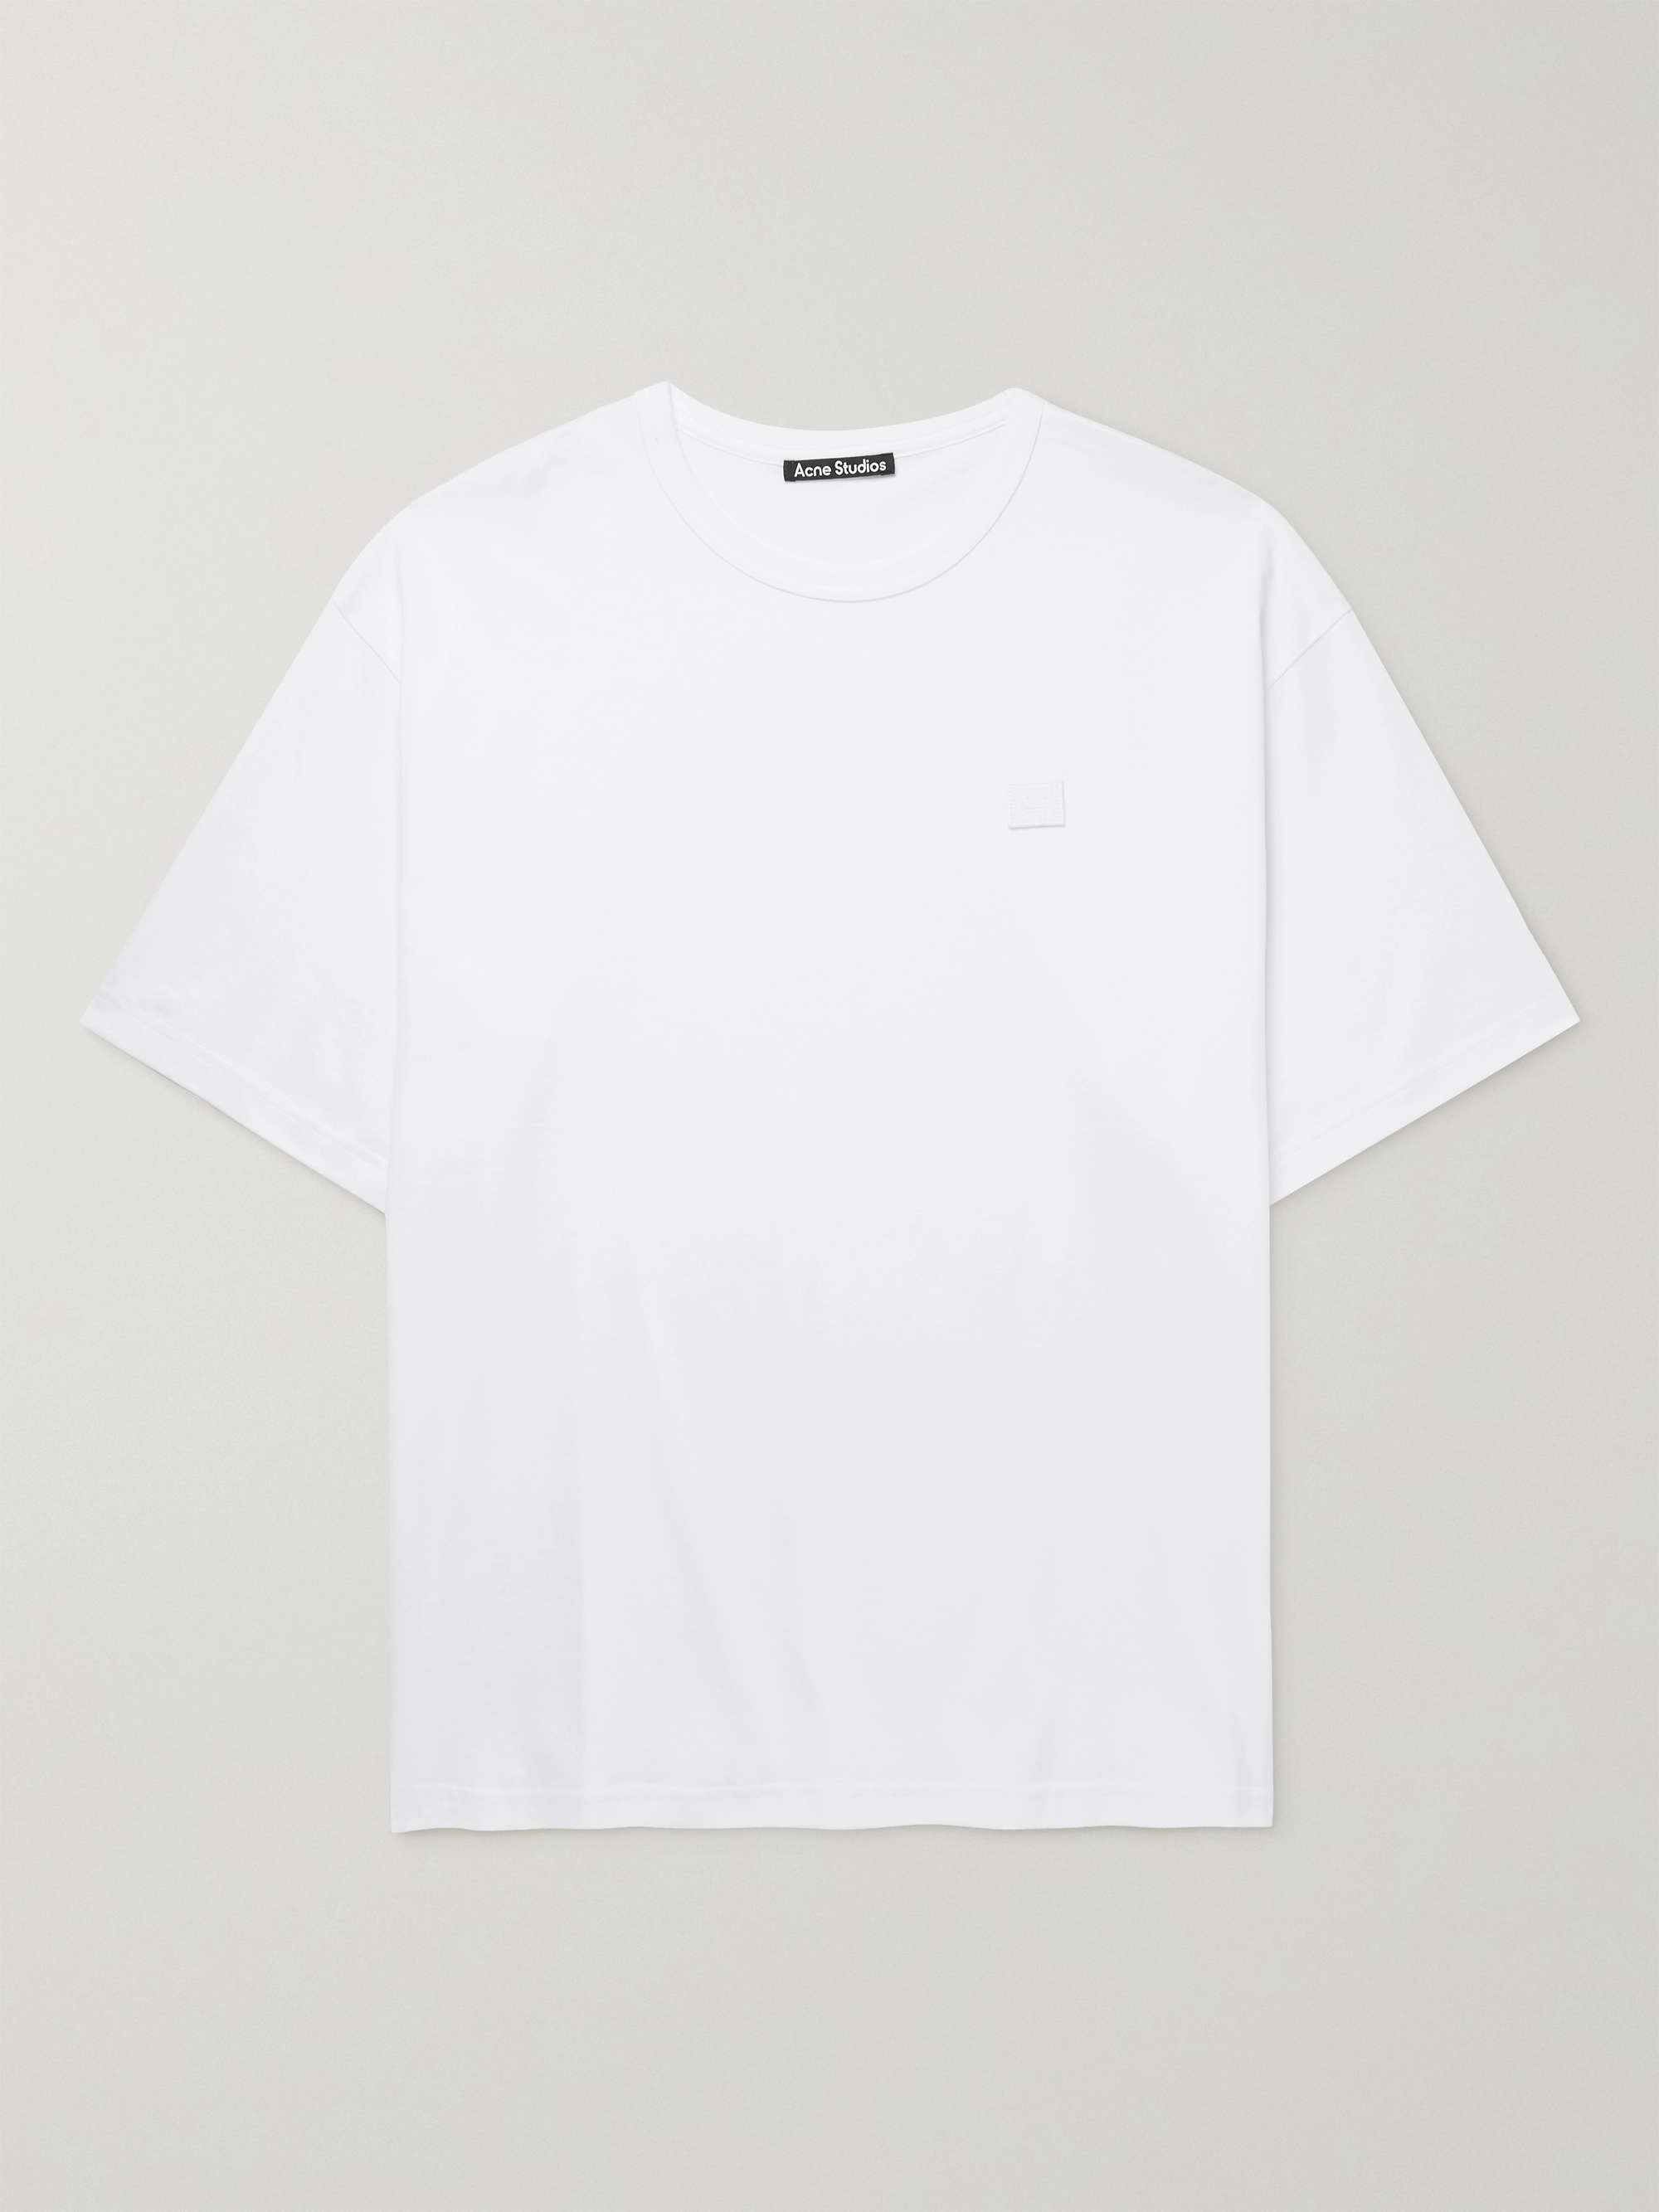 ACNE STUDIOS Exford Logo-Appliquéd Cotton-Jersey T-Shirt